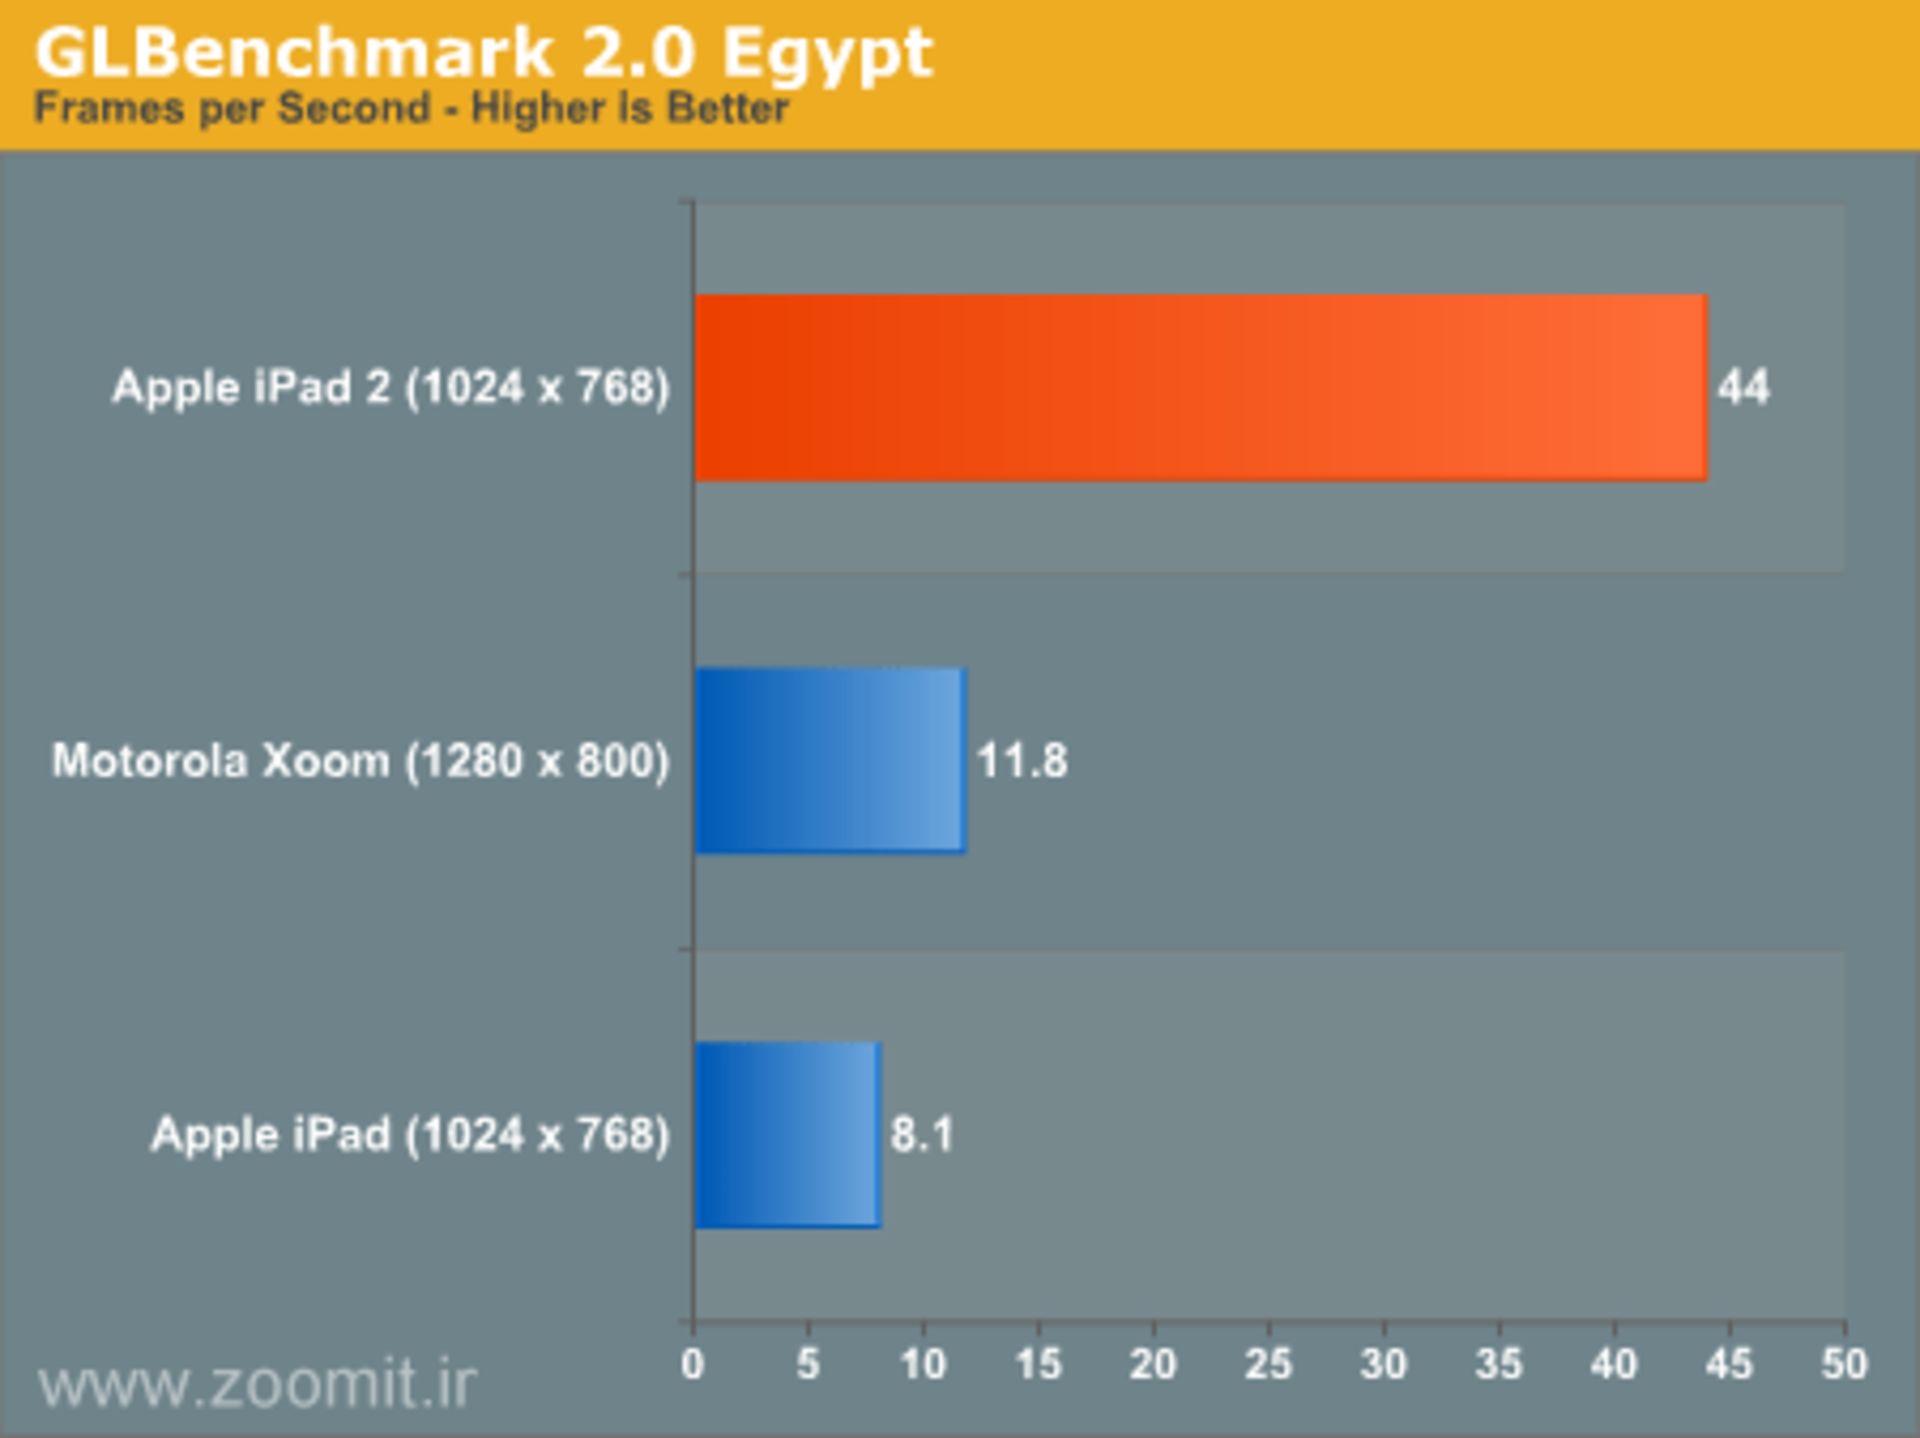 ipad 2 - Egypt Benchmark